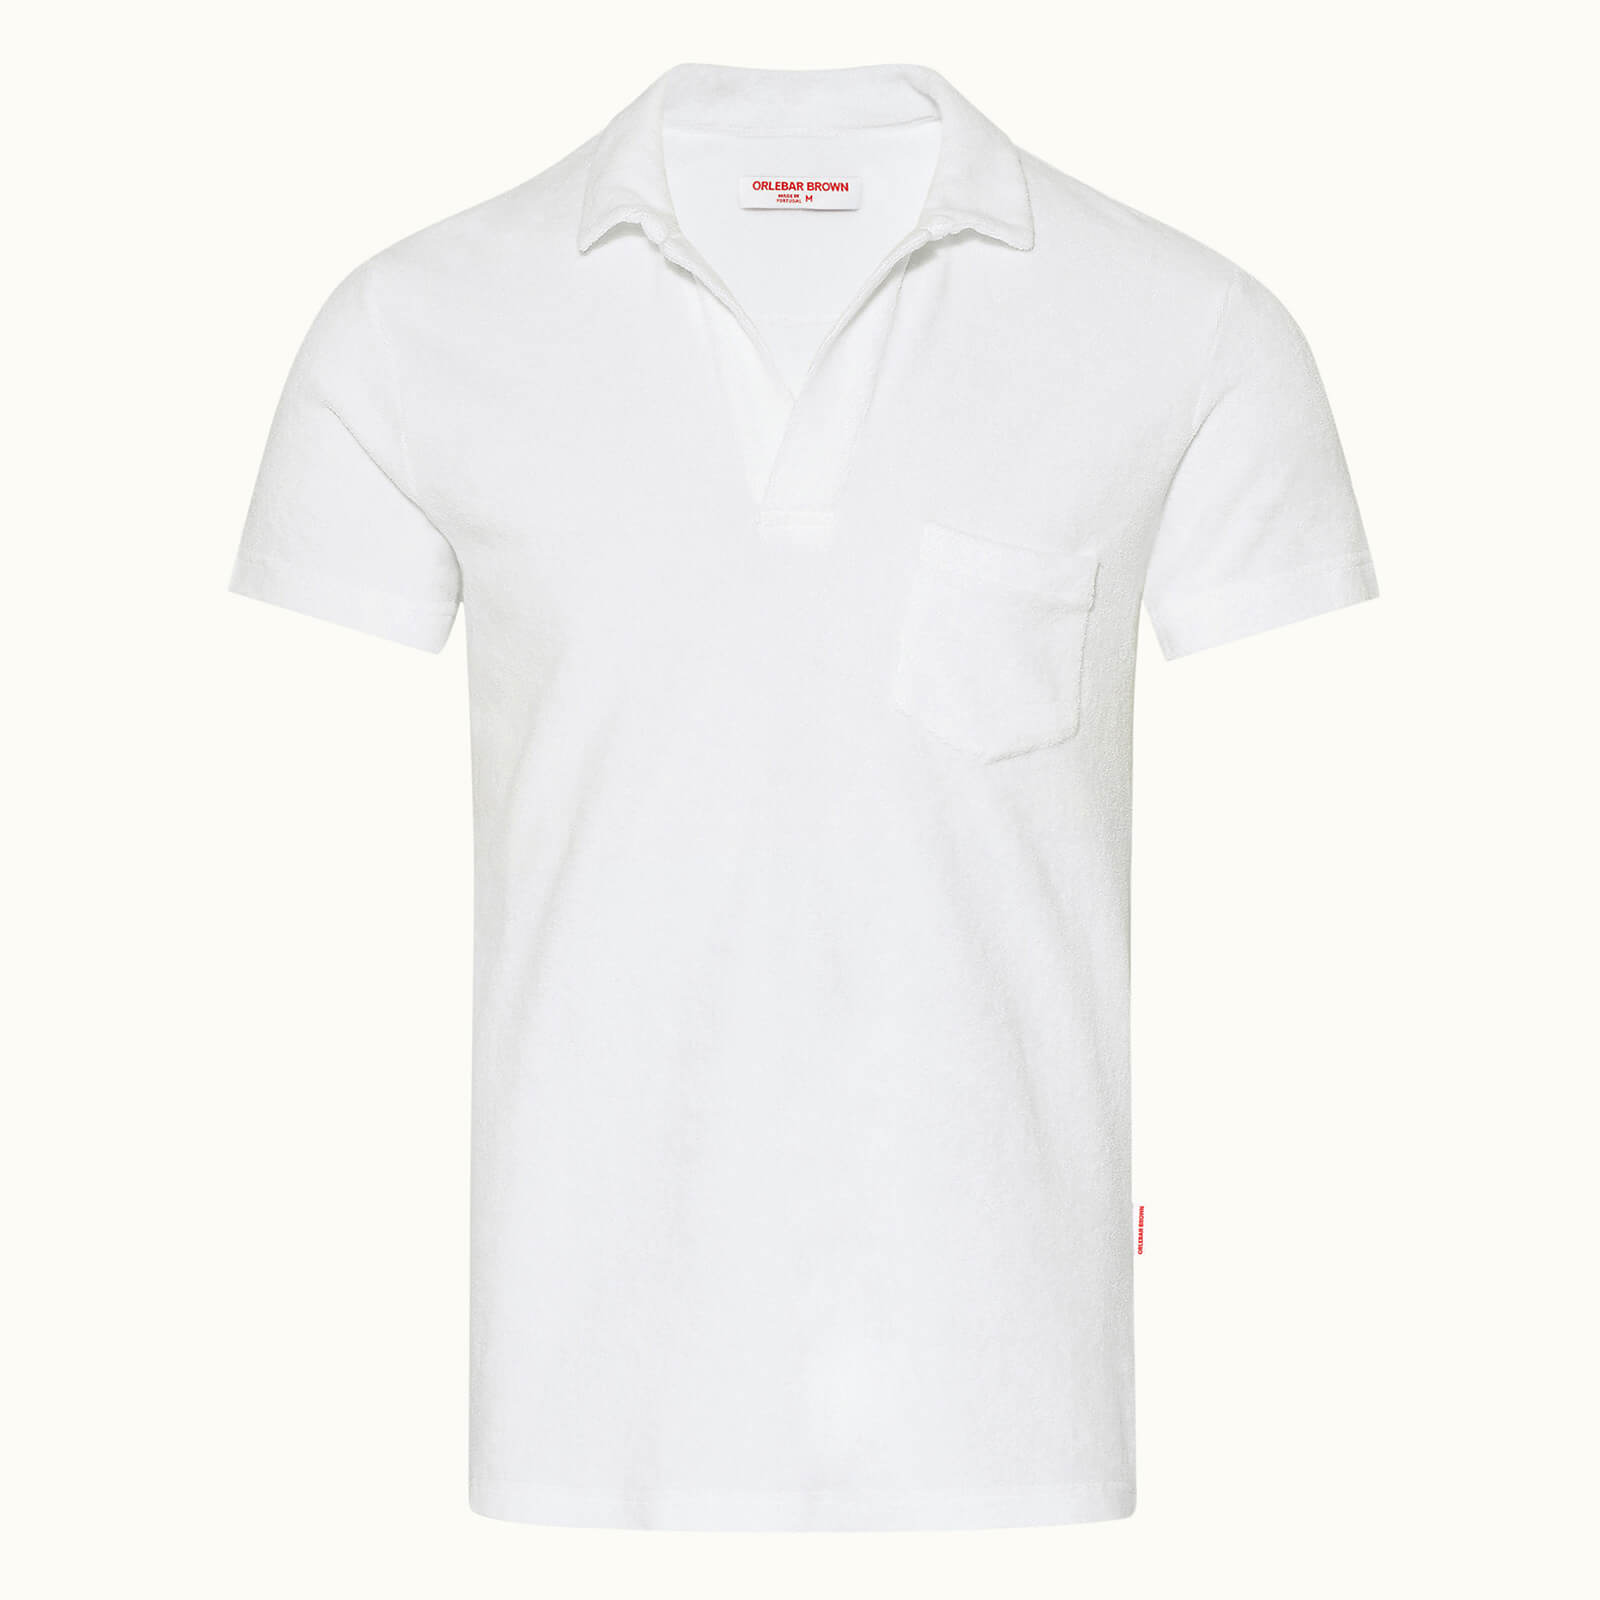 Orlebar Brown Men's Terry T-Shirt - White - S